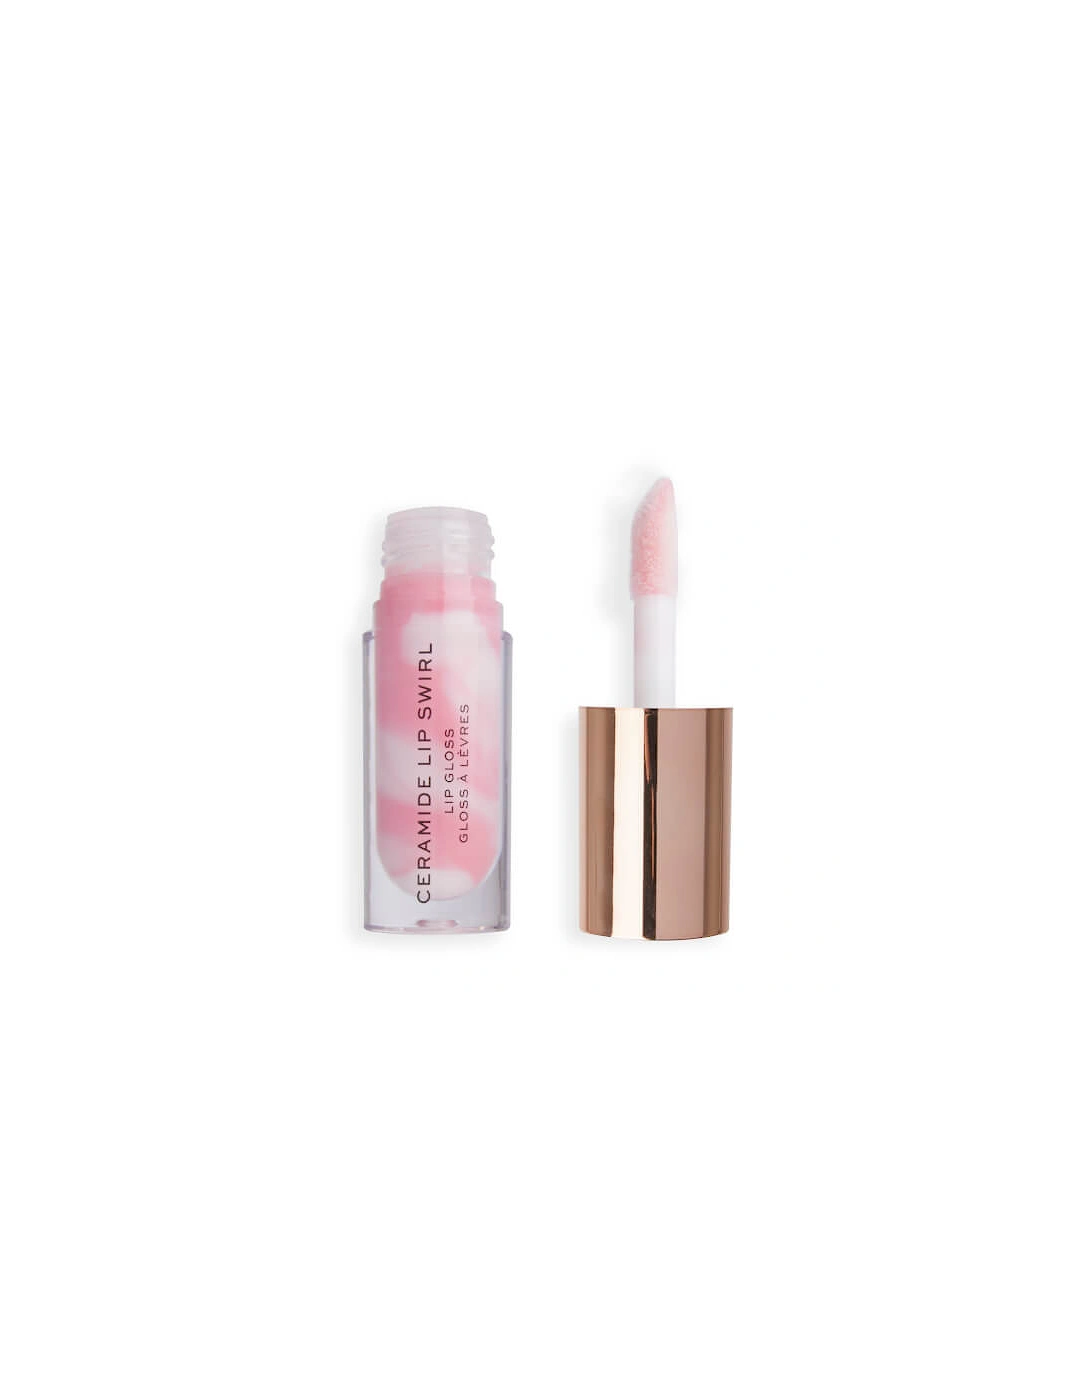 Makeup Lip Swirl Ceramide Gloss - Pure Gloss - Clear, 2 of 1